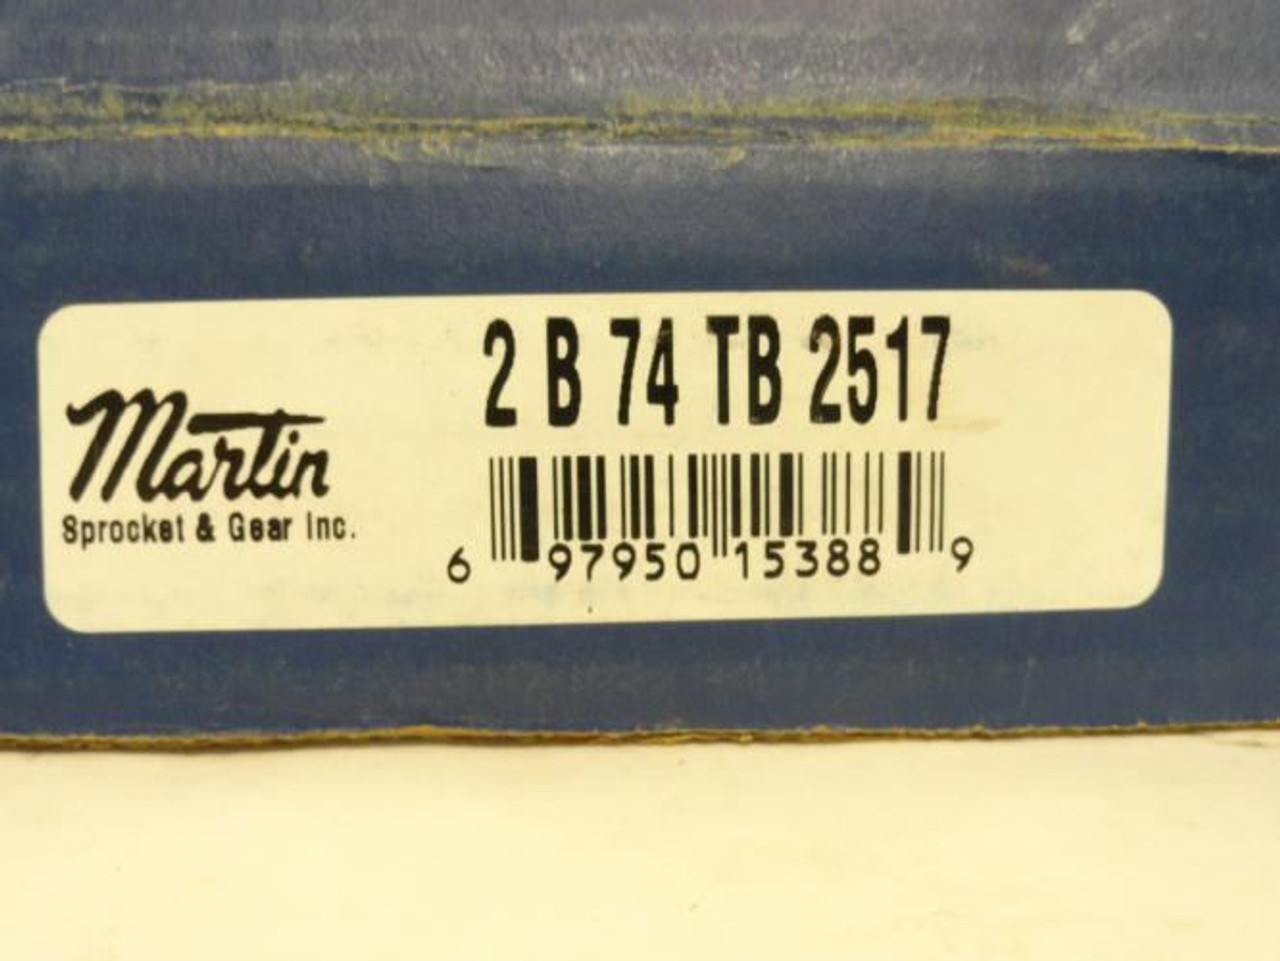 Martin 2B 74 TB 2517; Bushed V-Belt Pulley 2Gr A/B Section Size